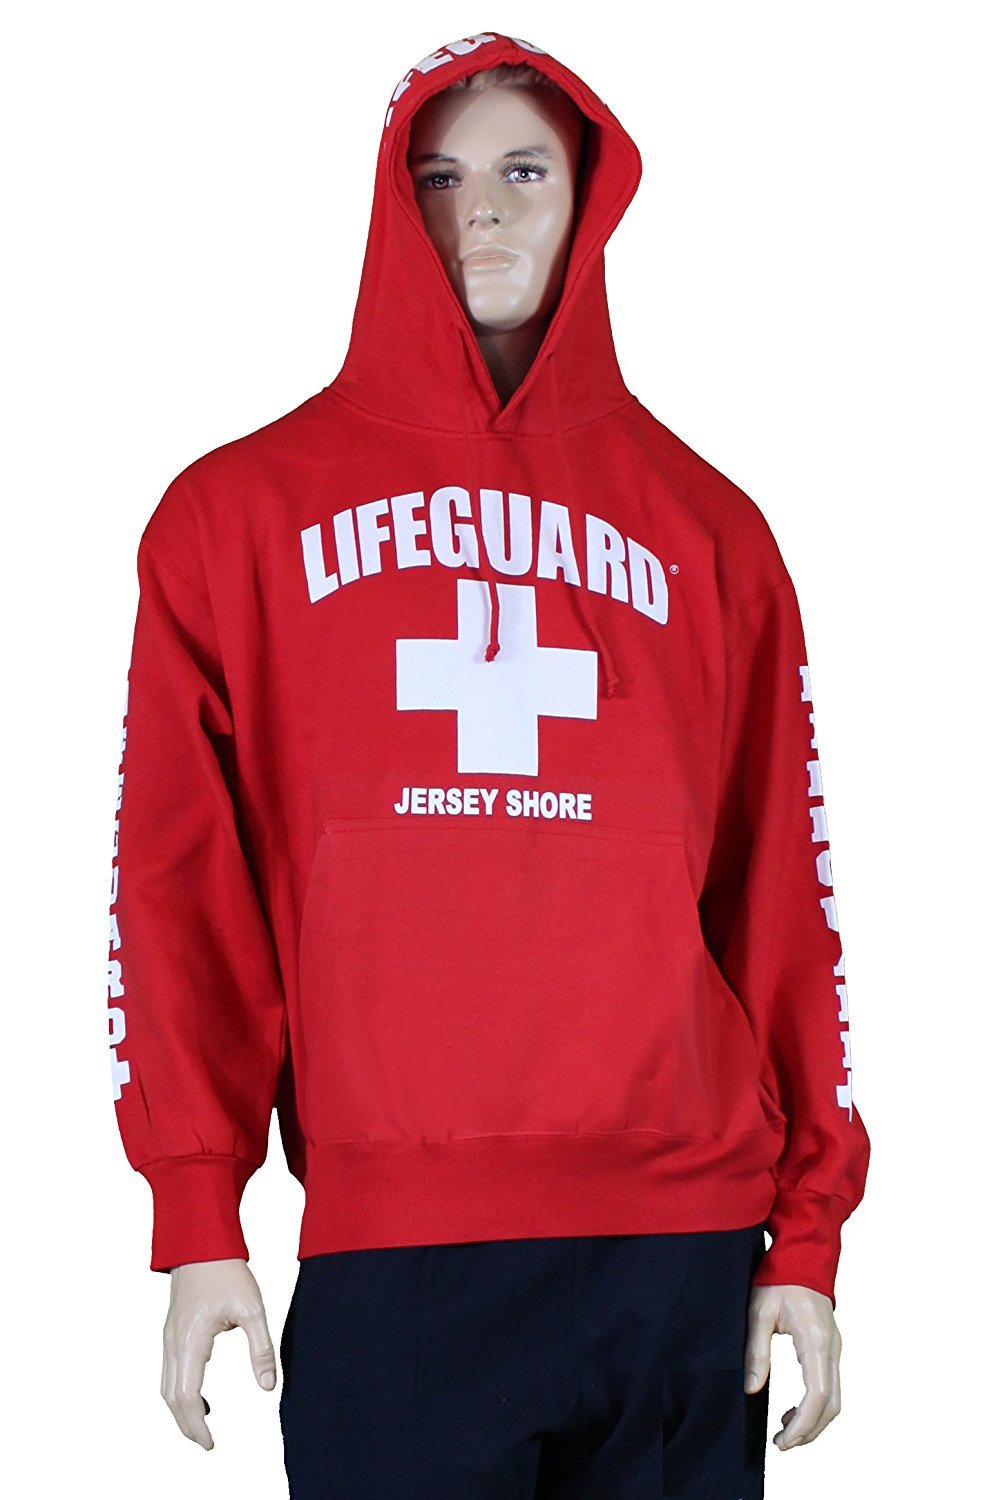 Lifeguard Jersey Shore NJ Life Guard Sweatshirt Red XL